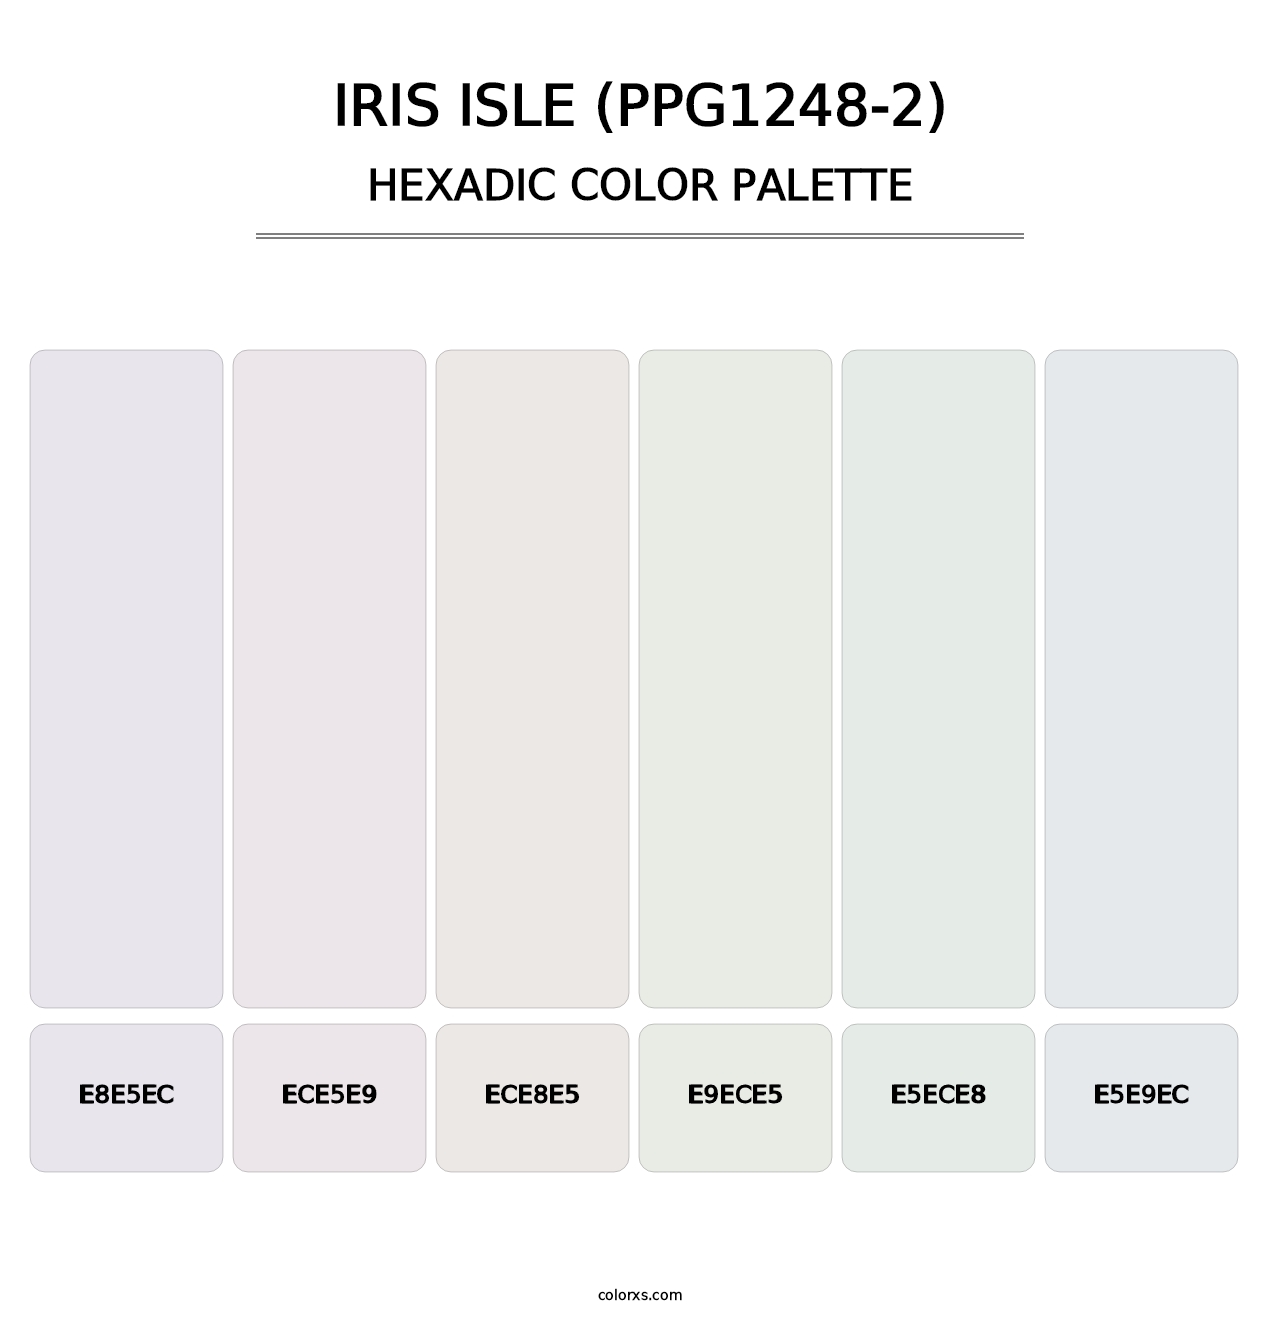 Iris Isle (PPG1248-2) - Hexadic Color Palette